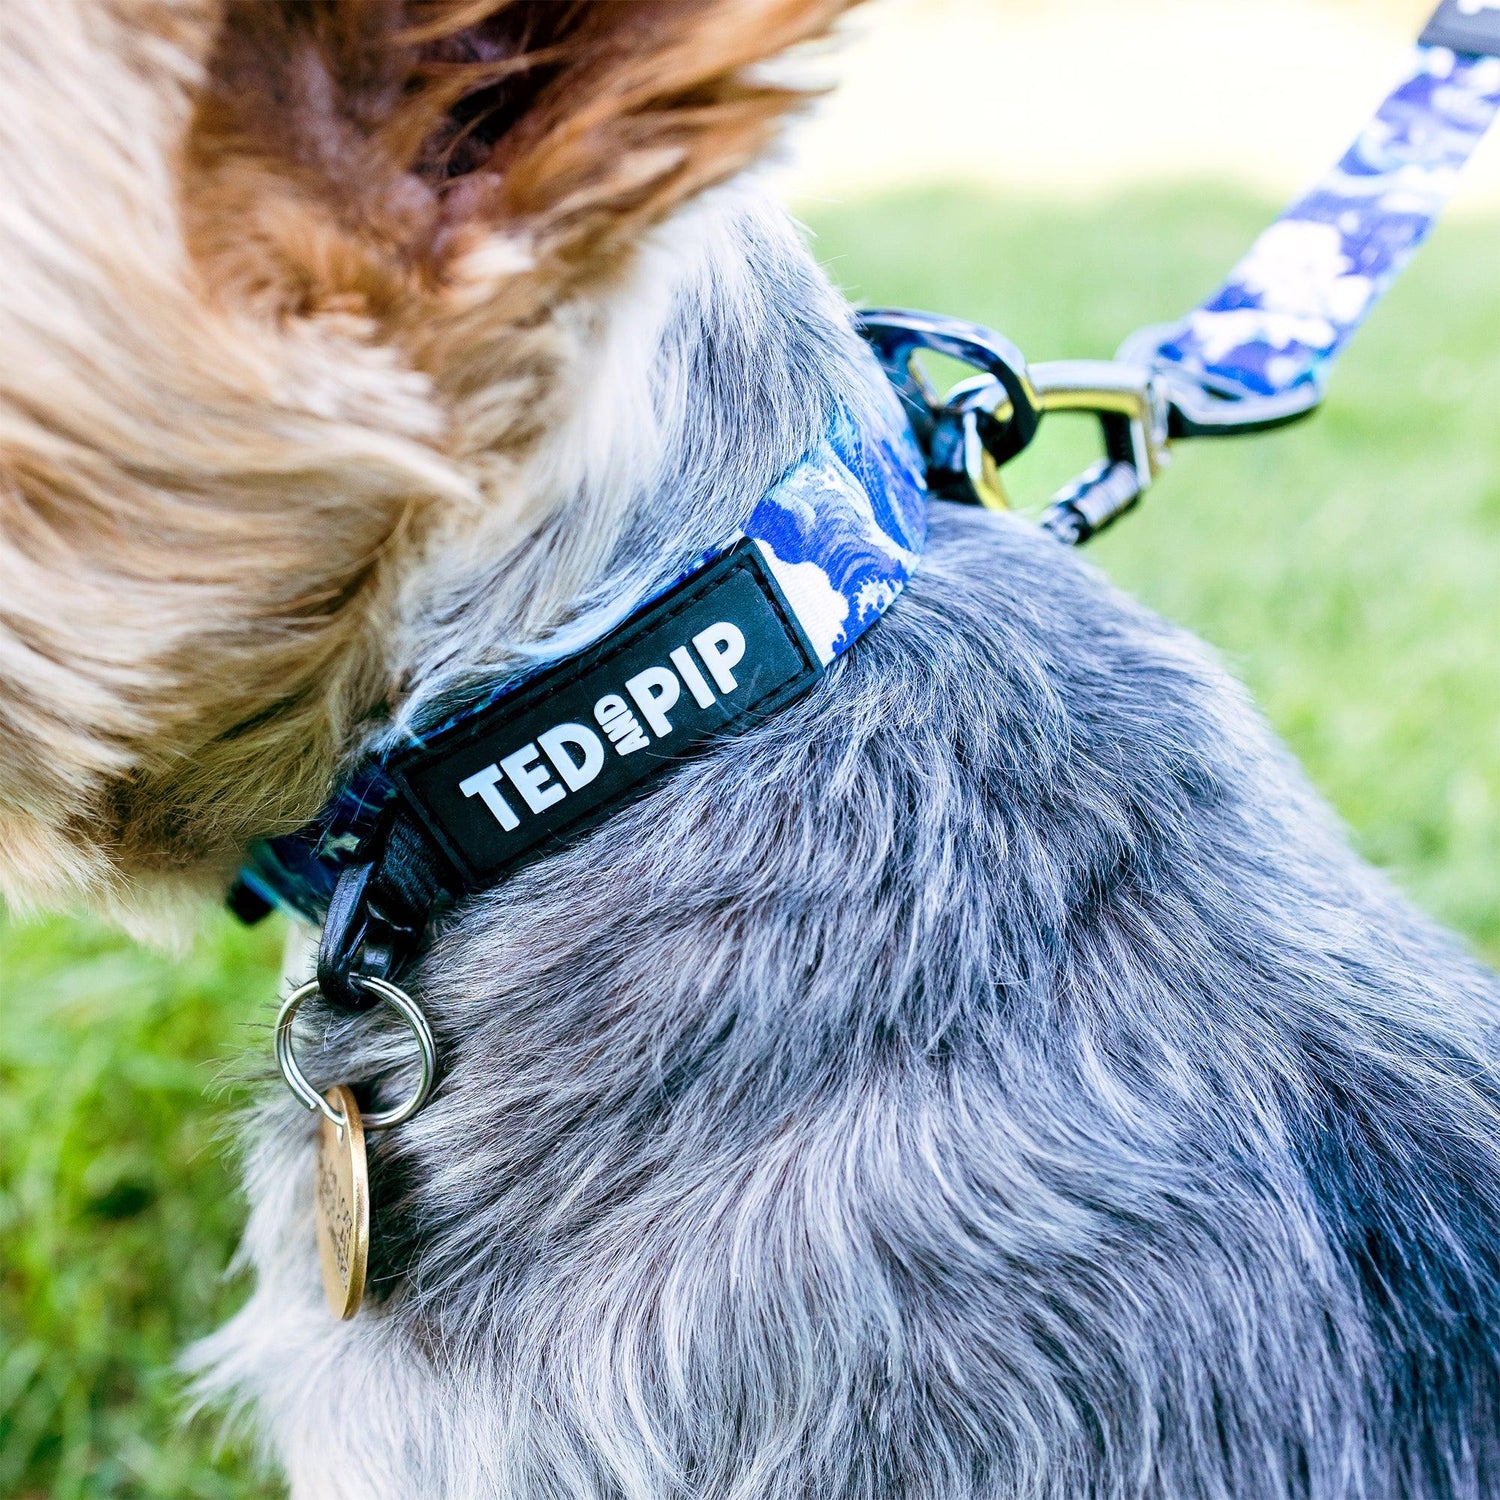 Ocean Waves - Stylish Dog Collar - Ted & Pip - Stylish Premium Dogwear